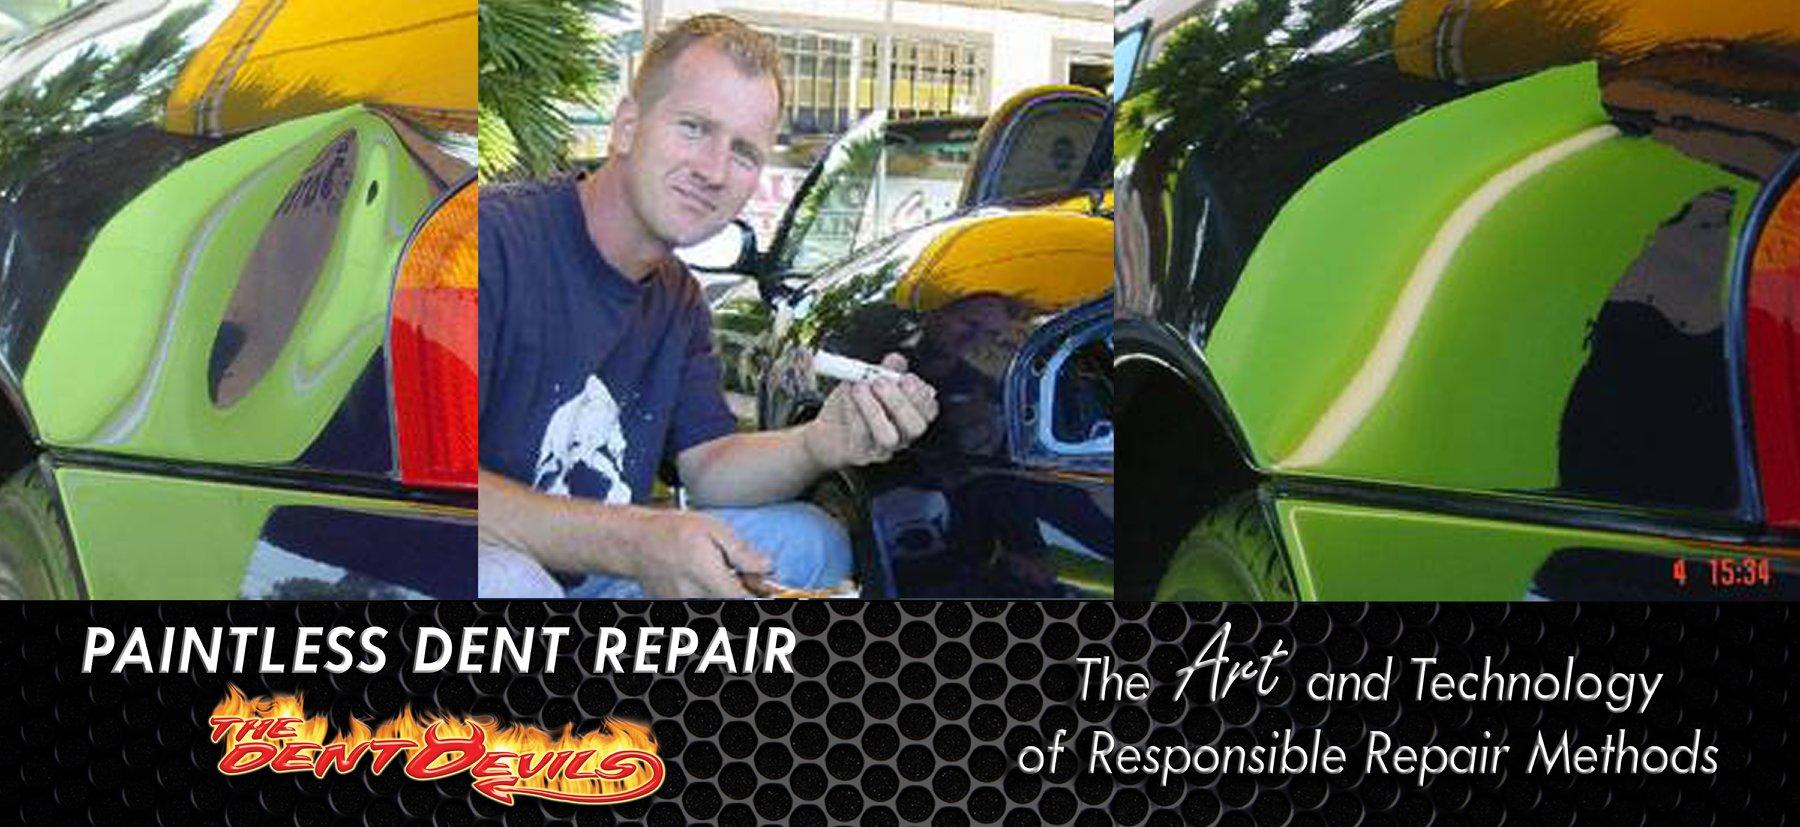 The Dent Devils Paintless Dent Removal - Auto Body & Paint Repair Shop Photo